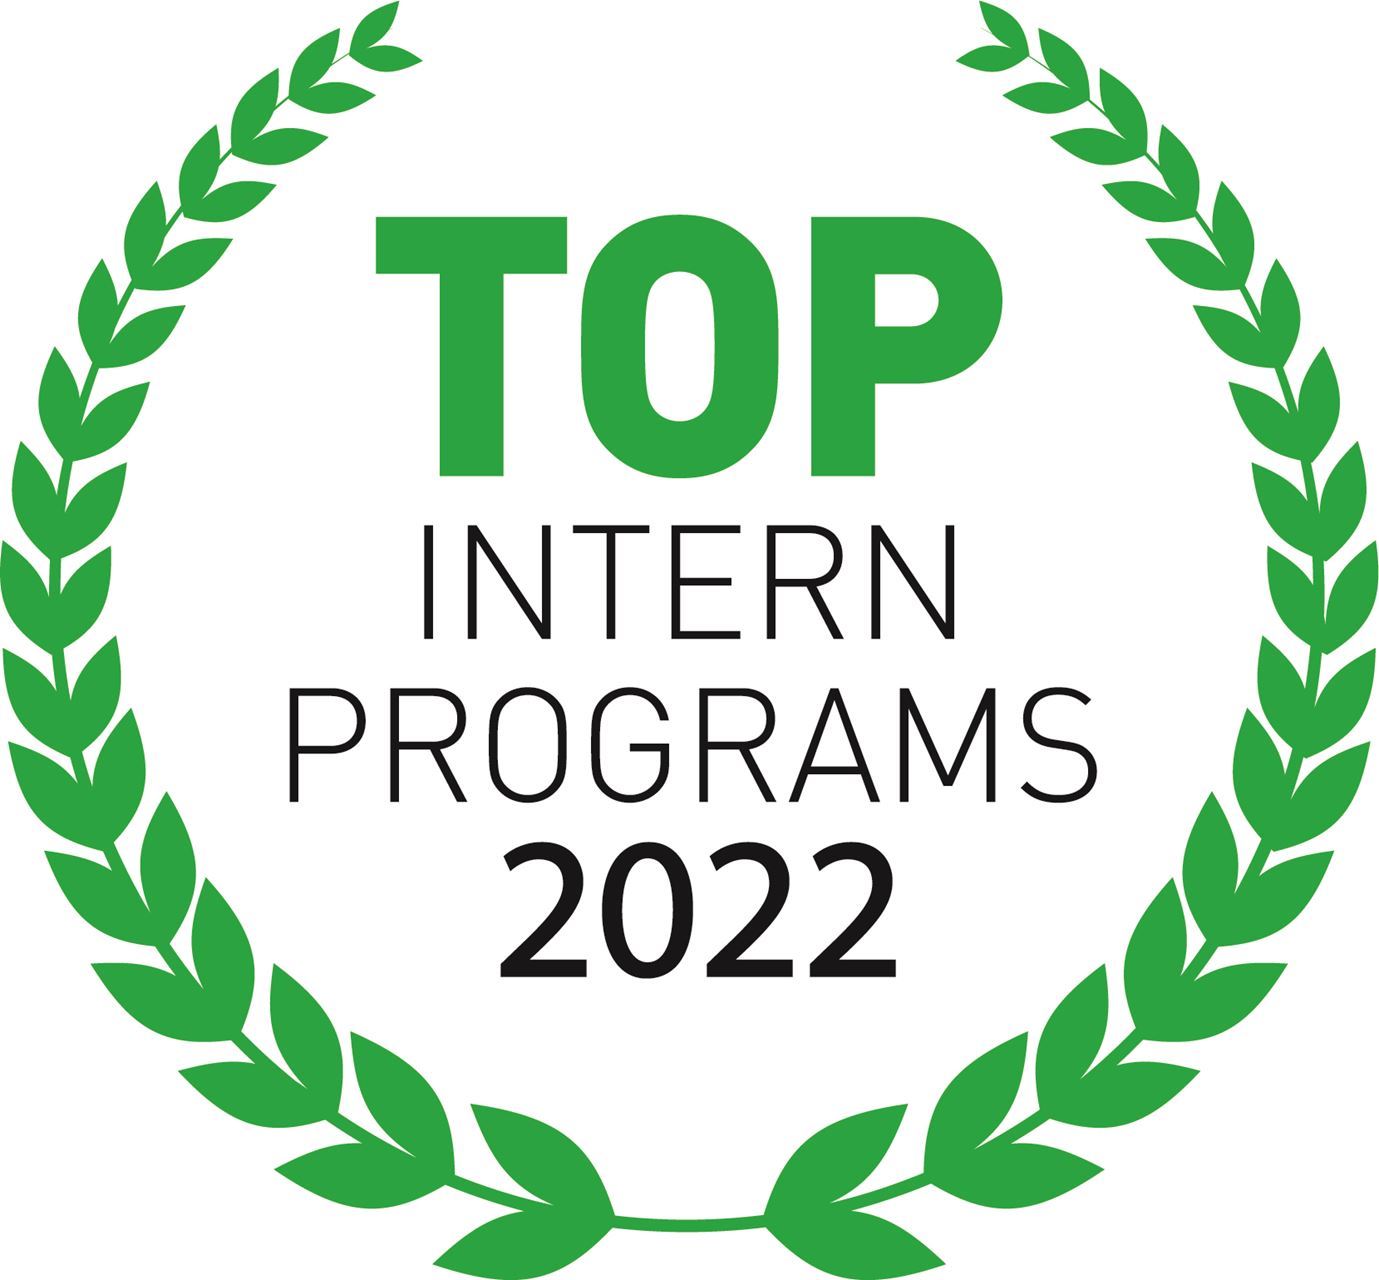 Top Intern Programs Award 2022